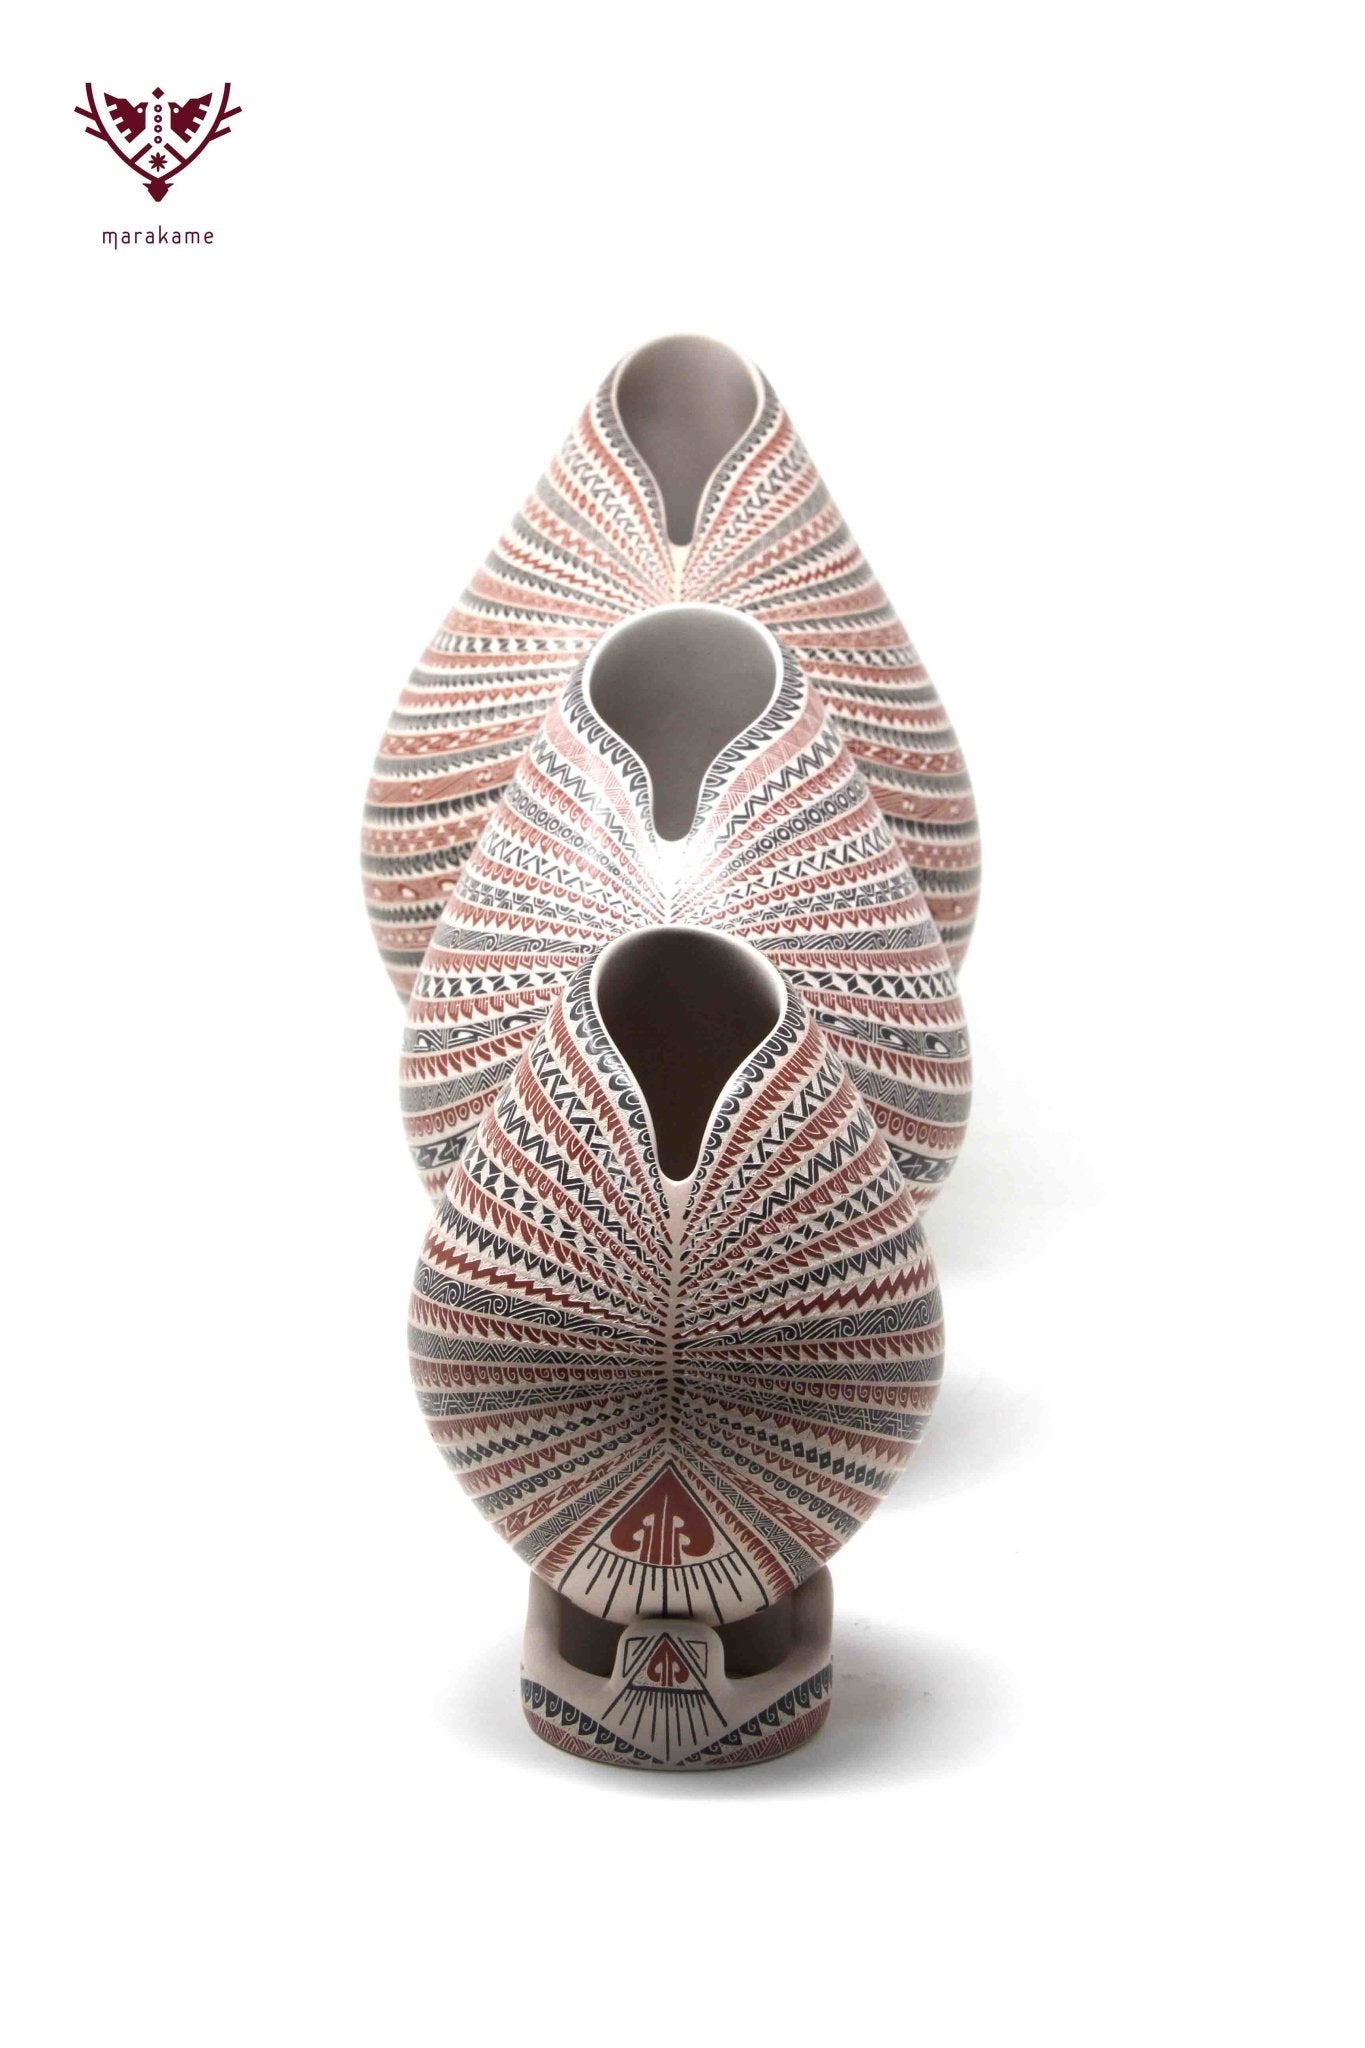 Ceramica Mata Ortiz - Trittico Bugarini e Gallegos - Arte Huichol - Marakame